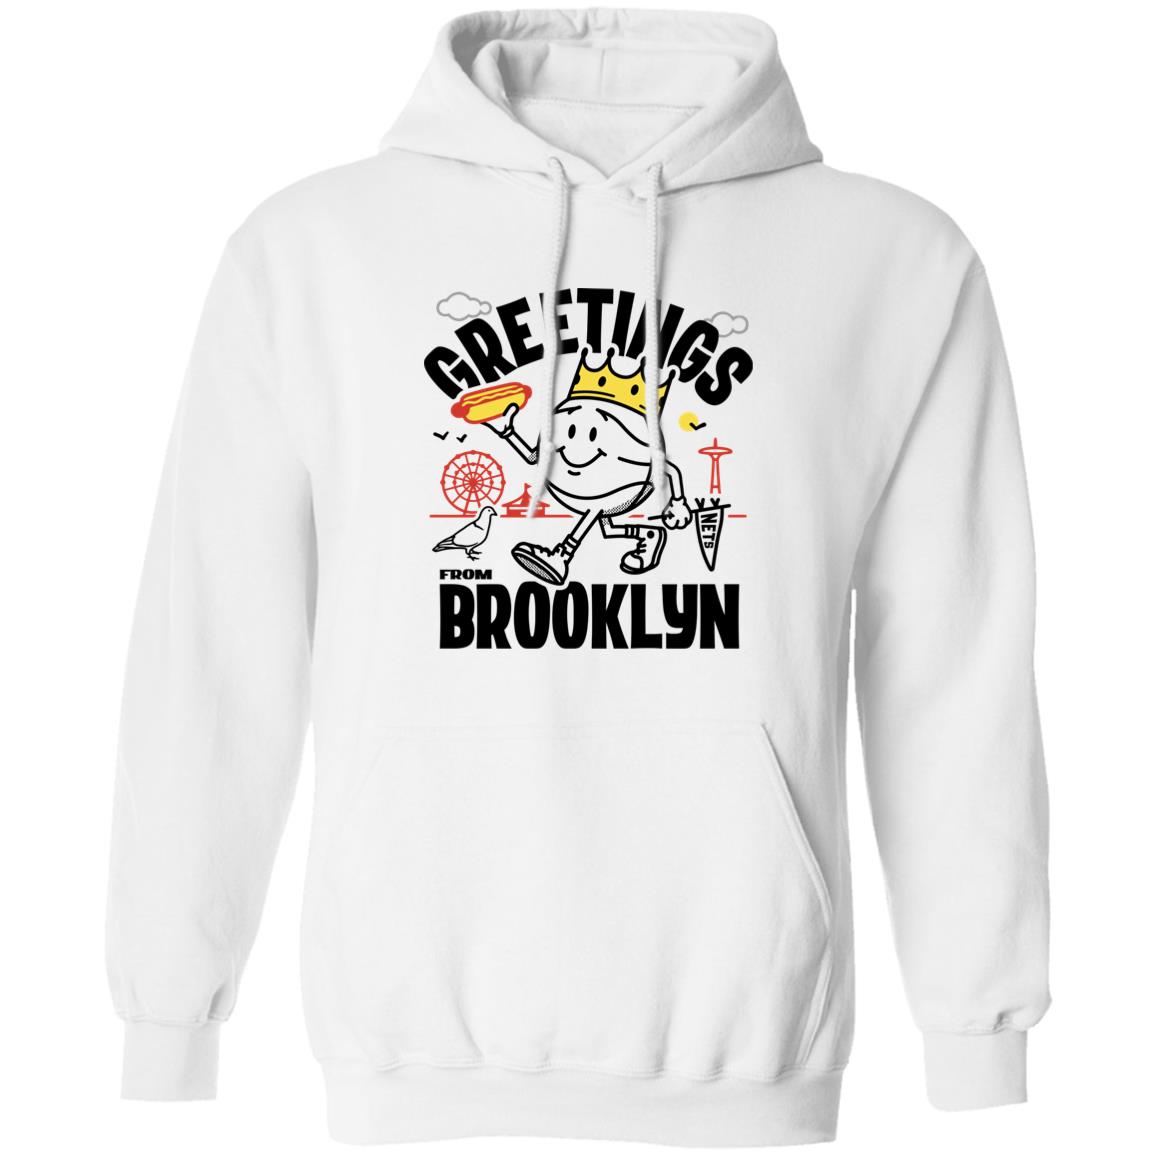 Greetings From Brooklyn Shirt 1